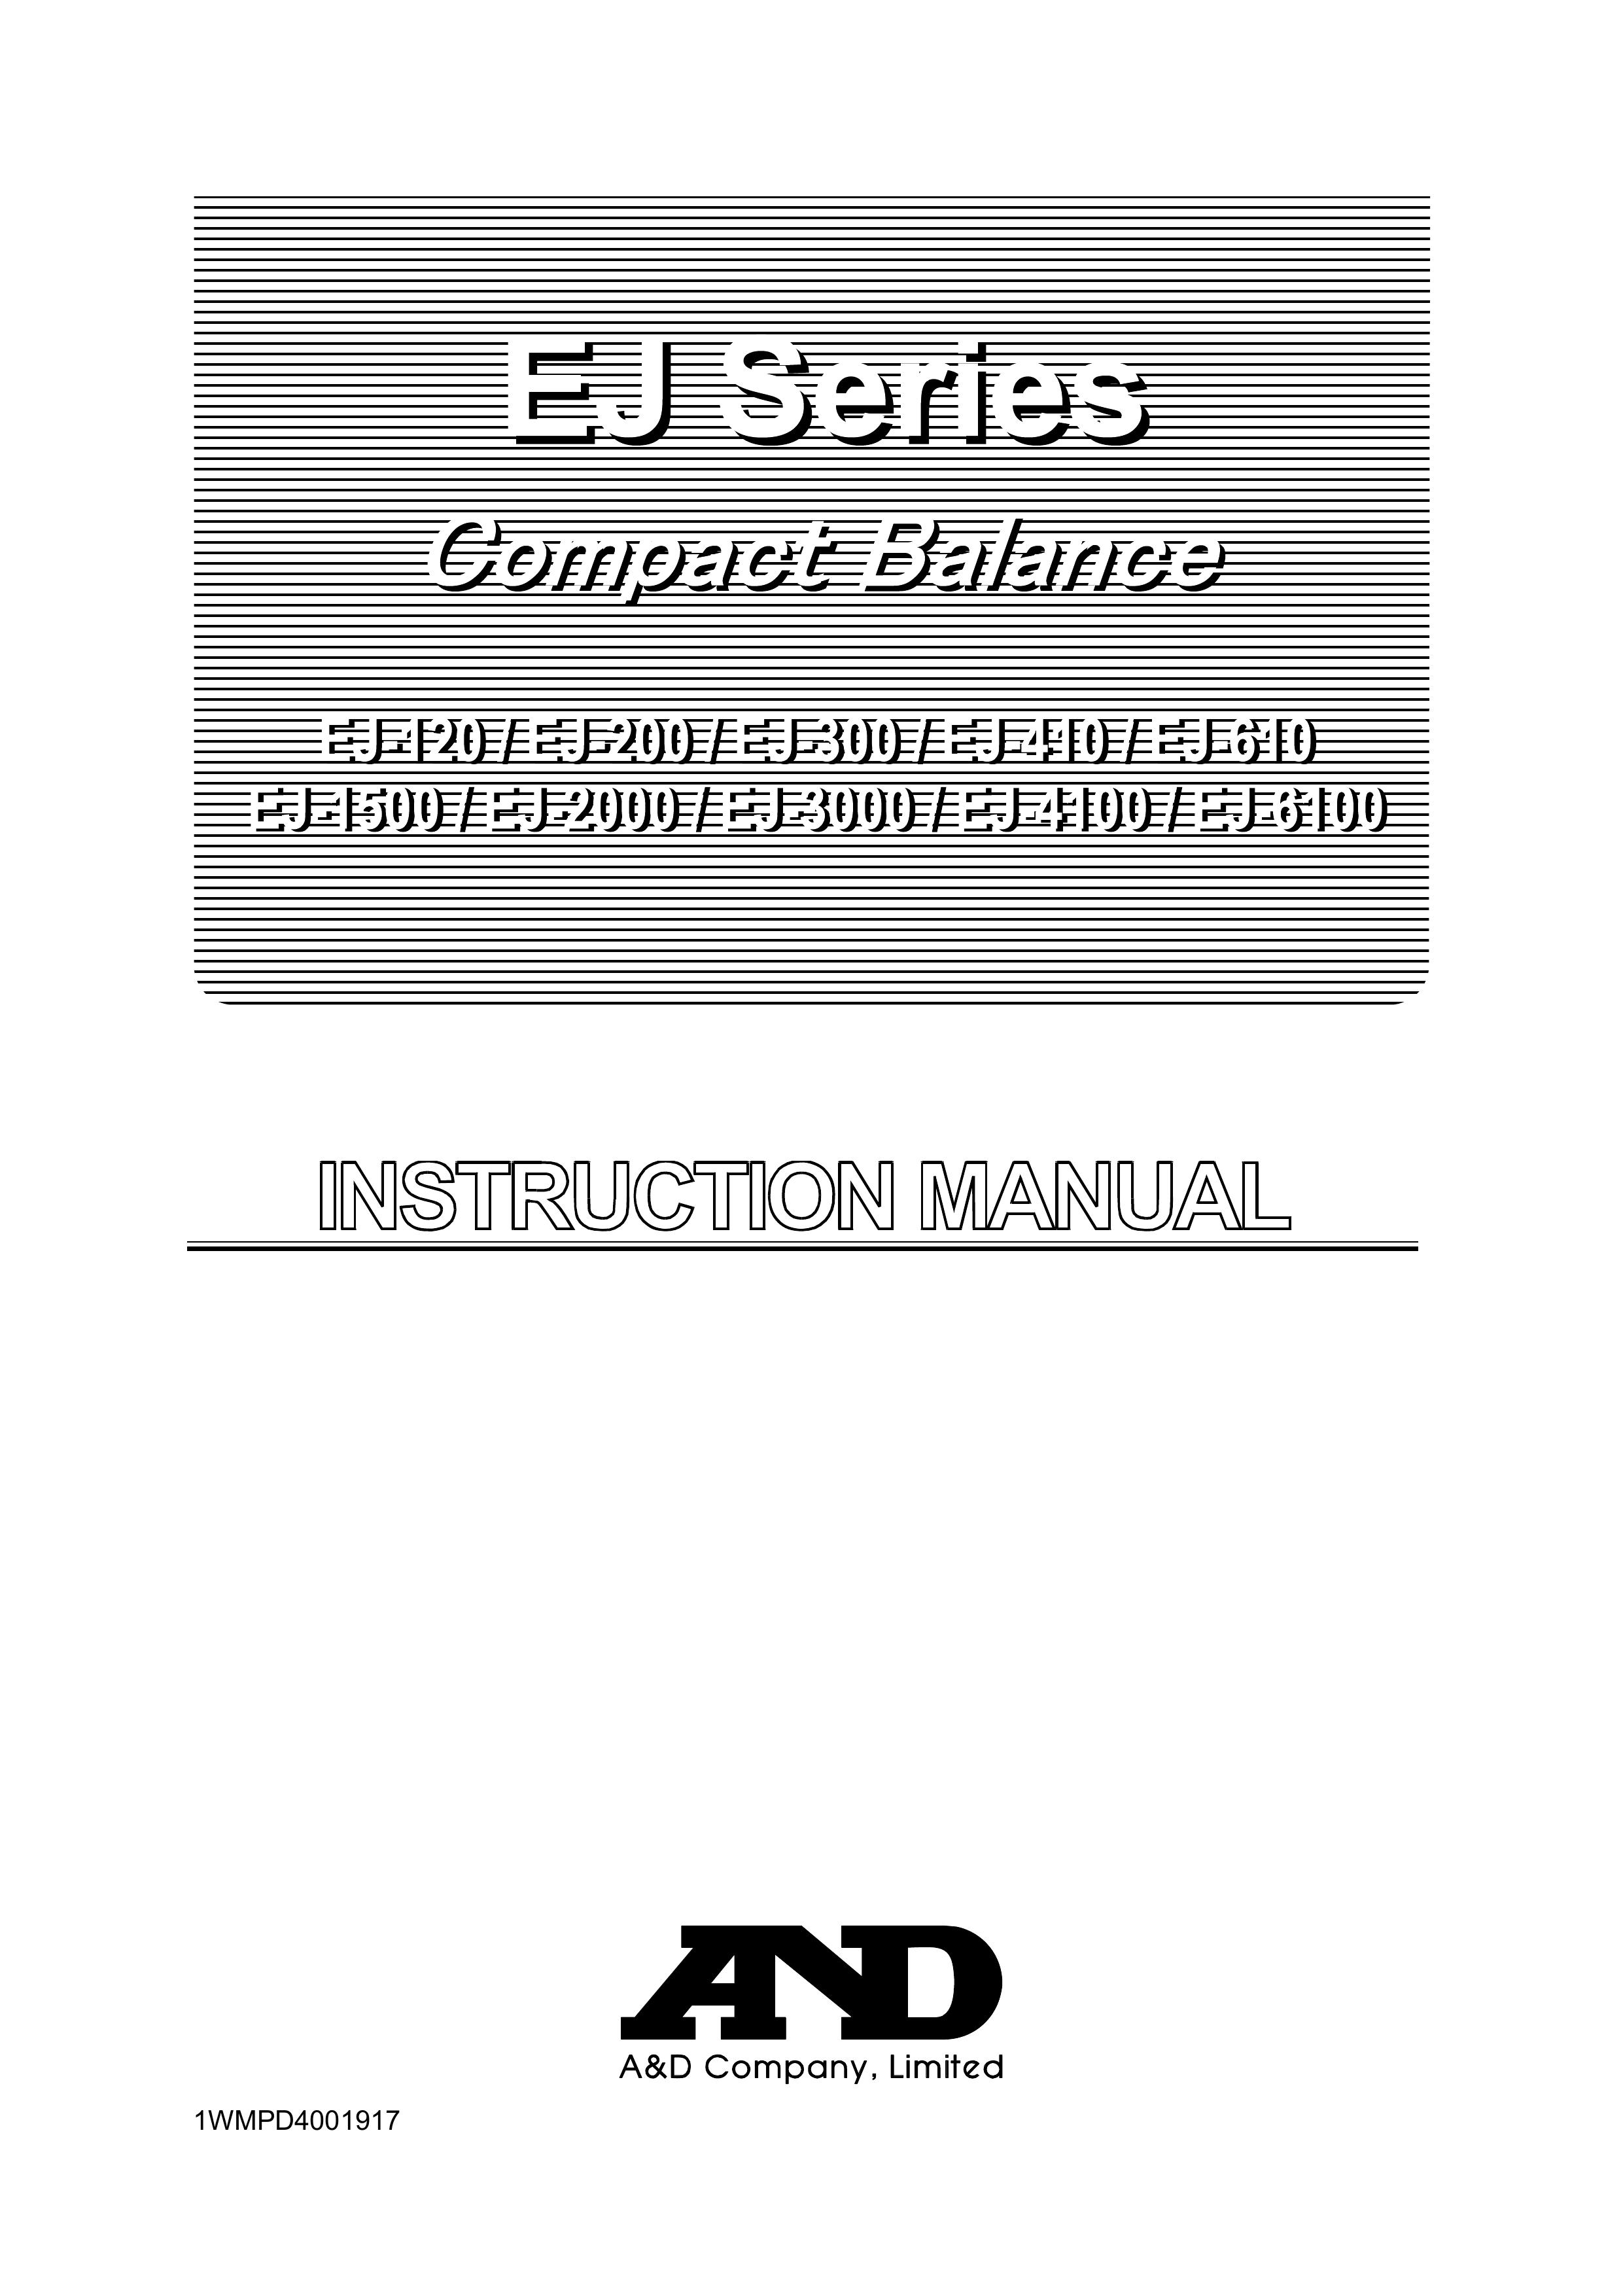 A&D EJ-1500 Scale User Manual